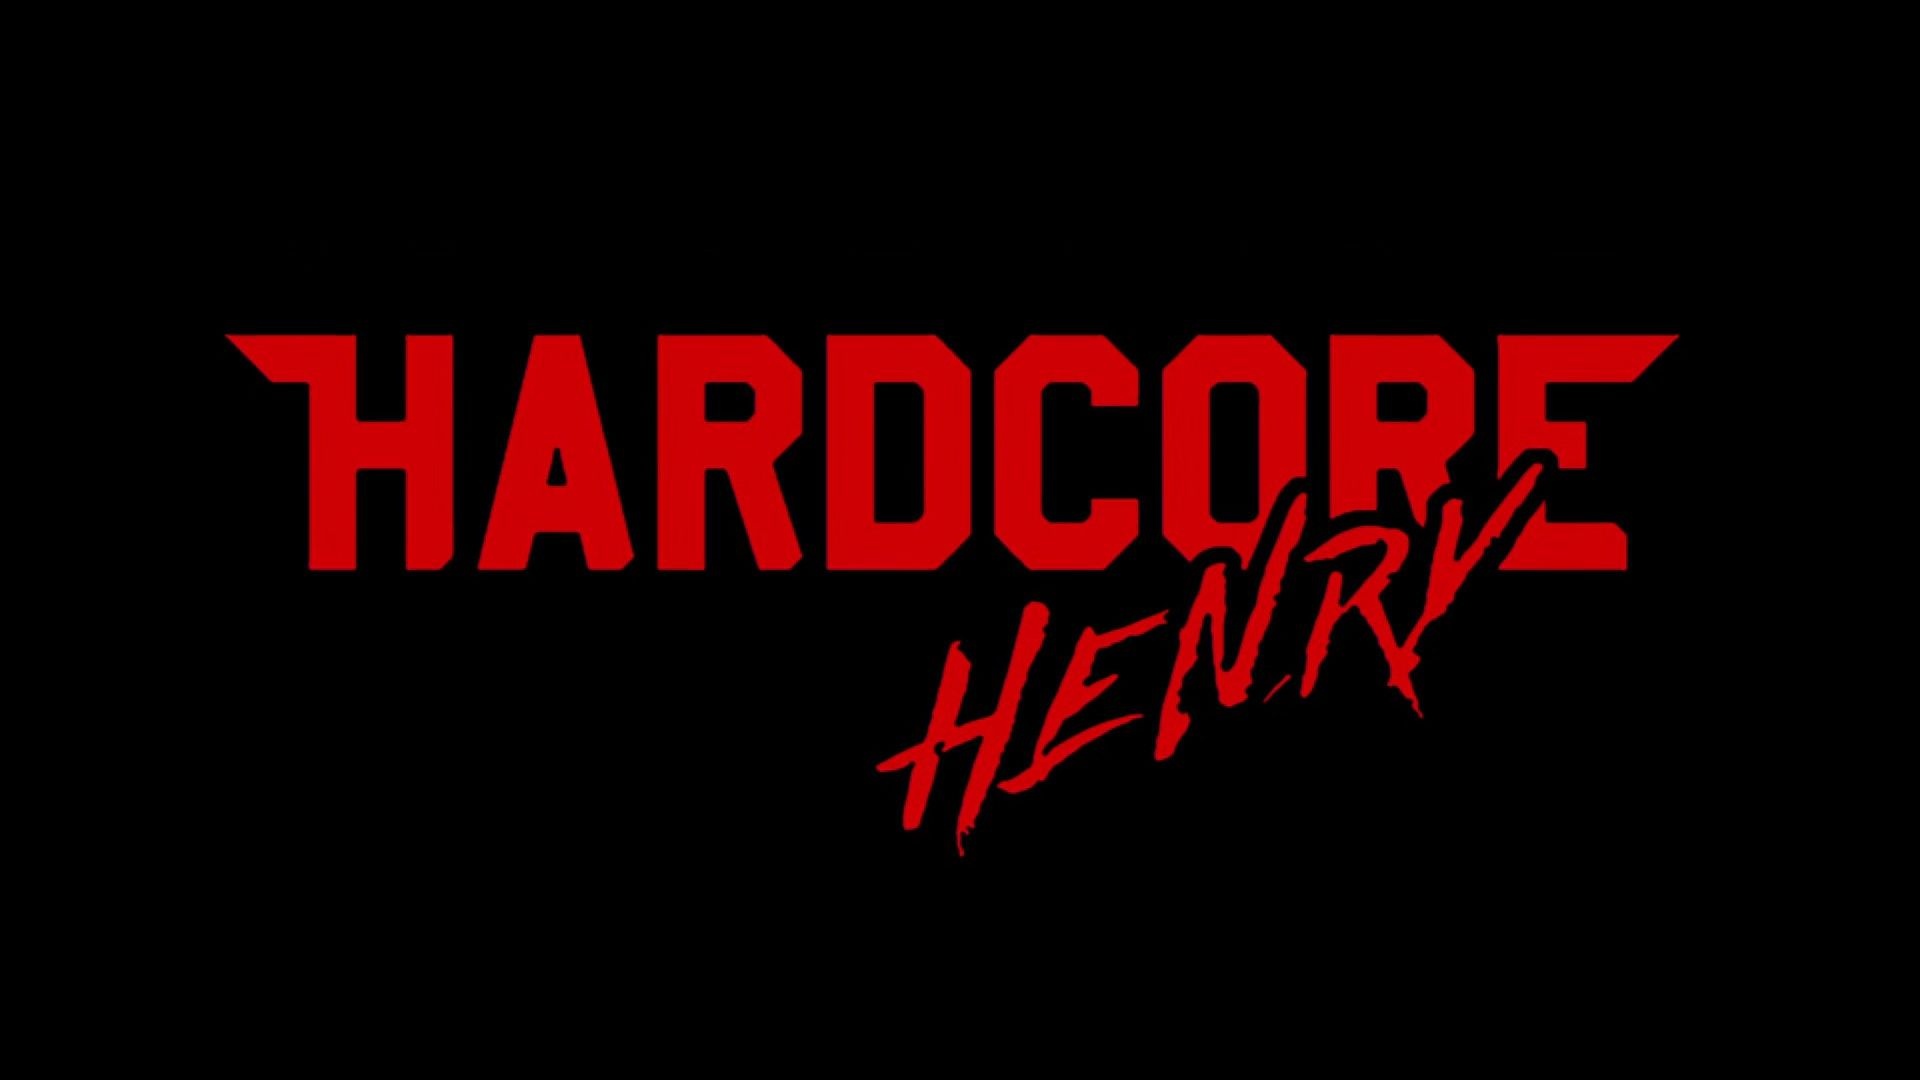 Hardcore Henry, Wallpapers, Action-packed film, Thrilling adventure, 1920x1080 Full HD Desktop